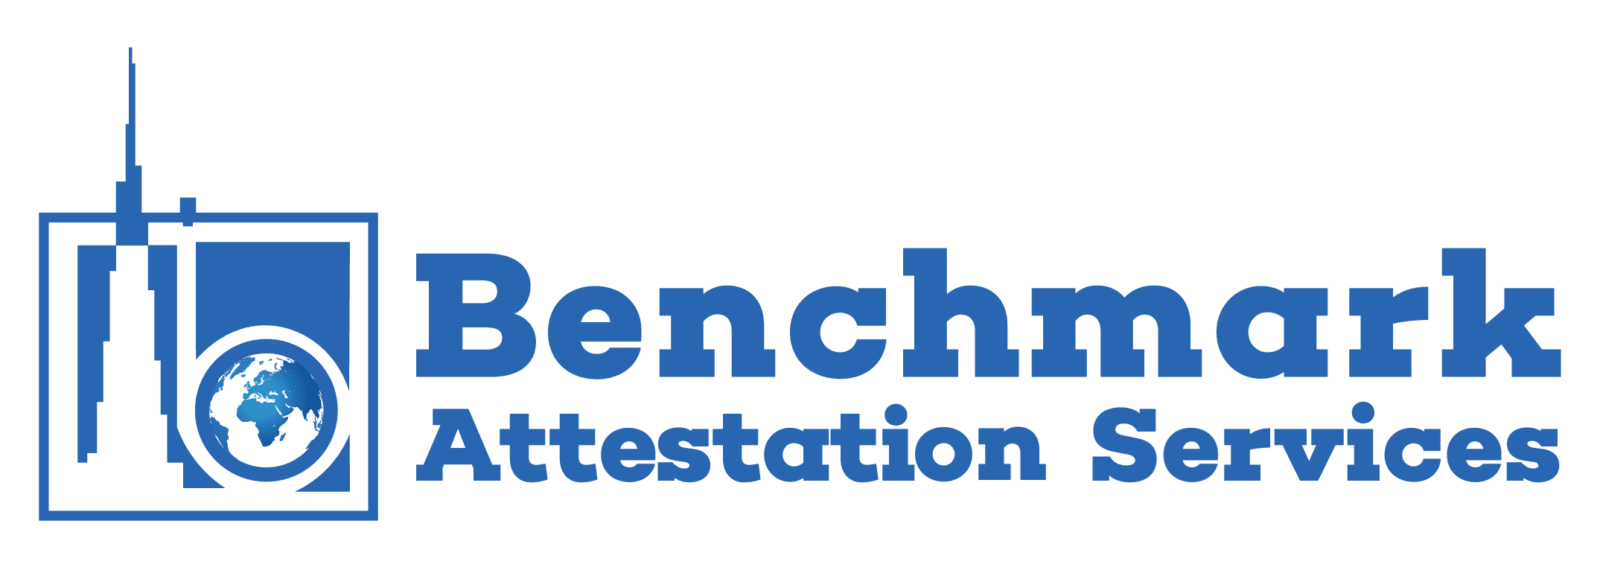 Benchmark Attestation Service